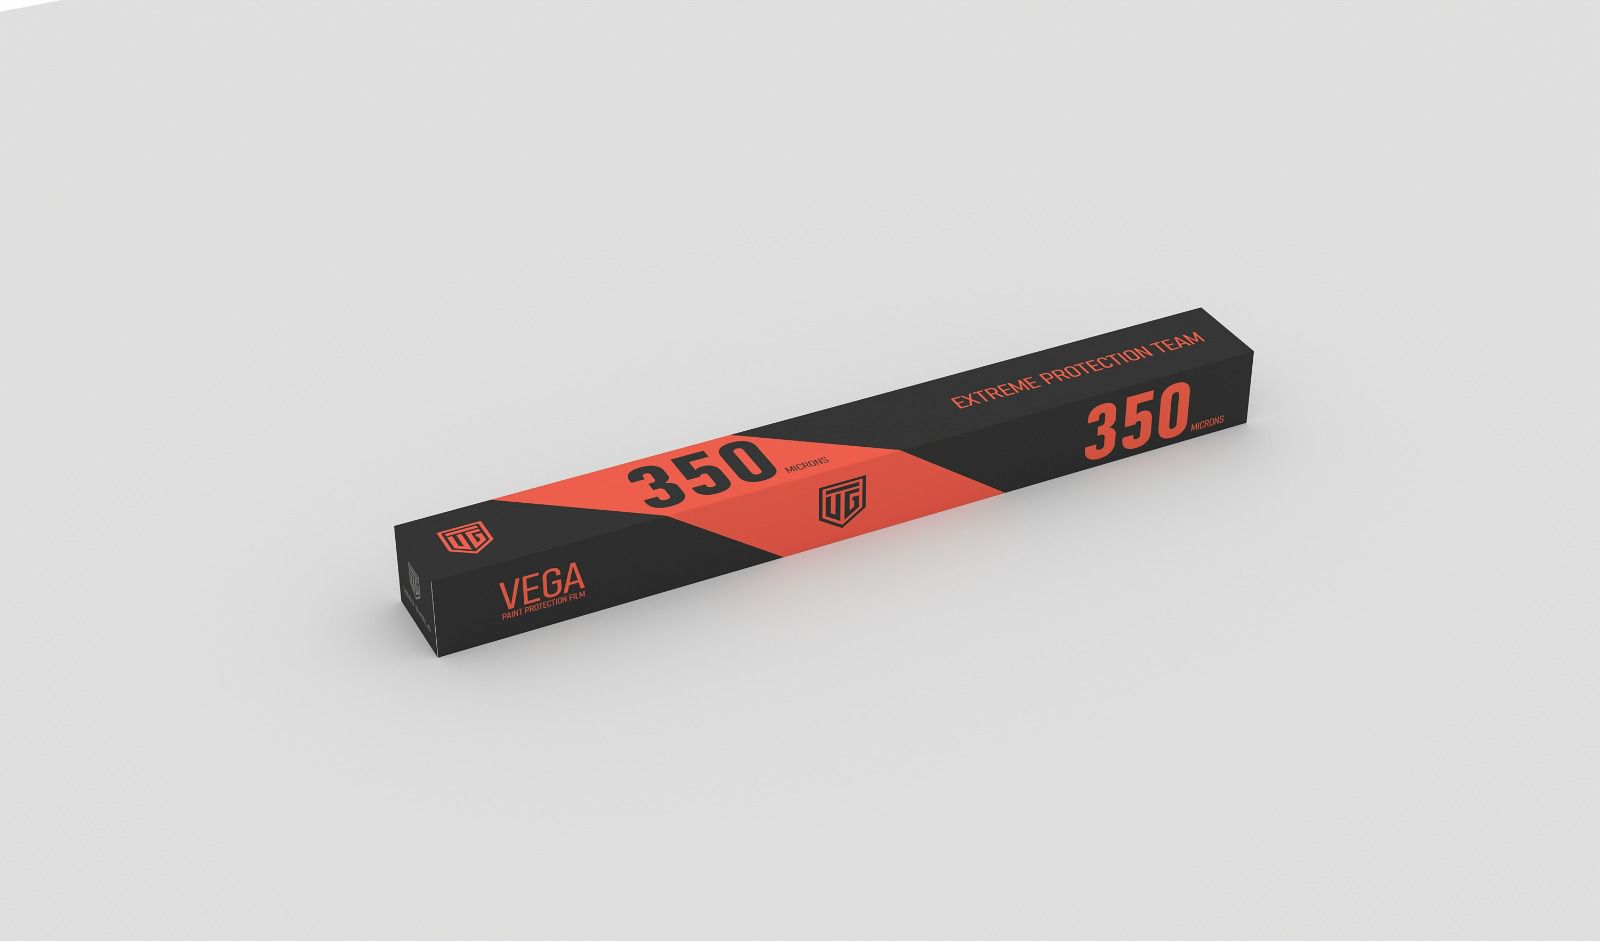 VEGA 350 HT